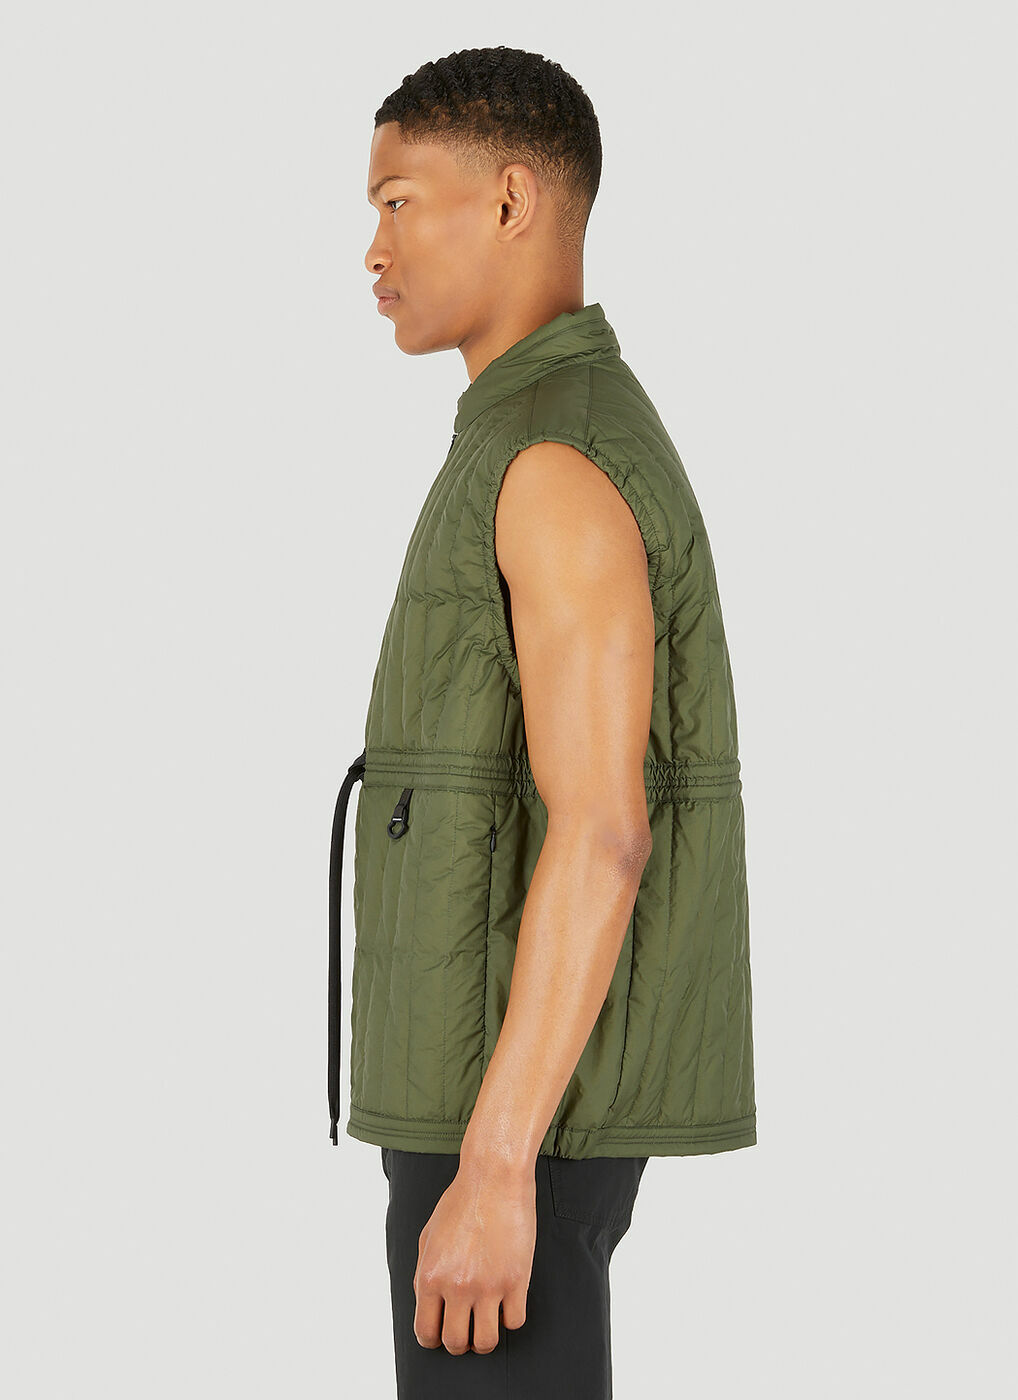 Retz Sleeveless Jacket In Green Moncler